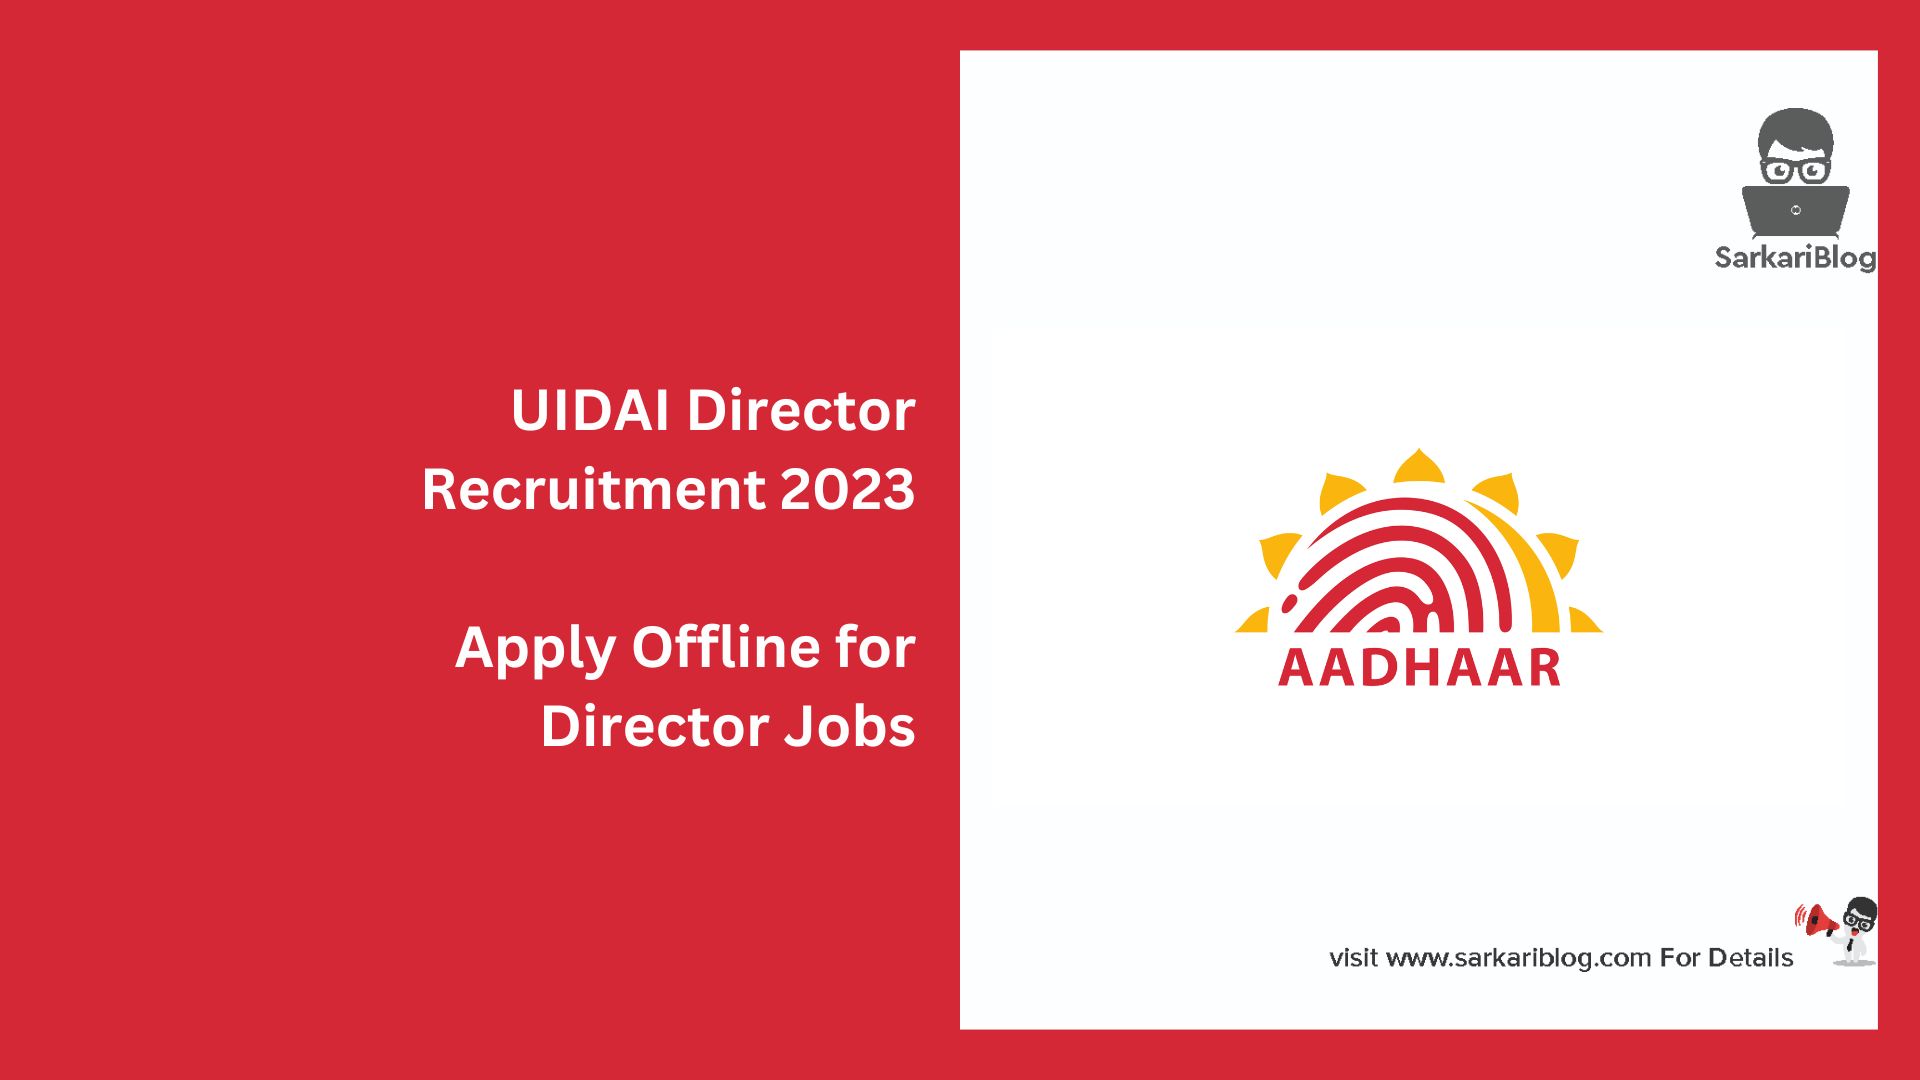 UIDAI Director Recruitment 2023